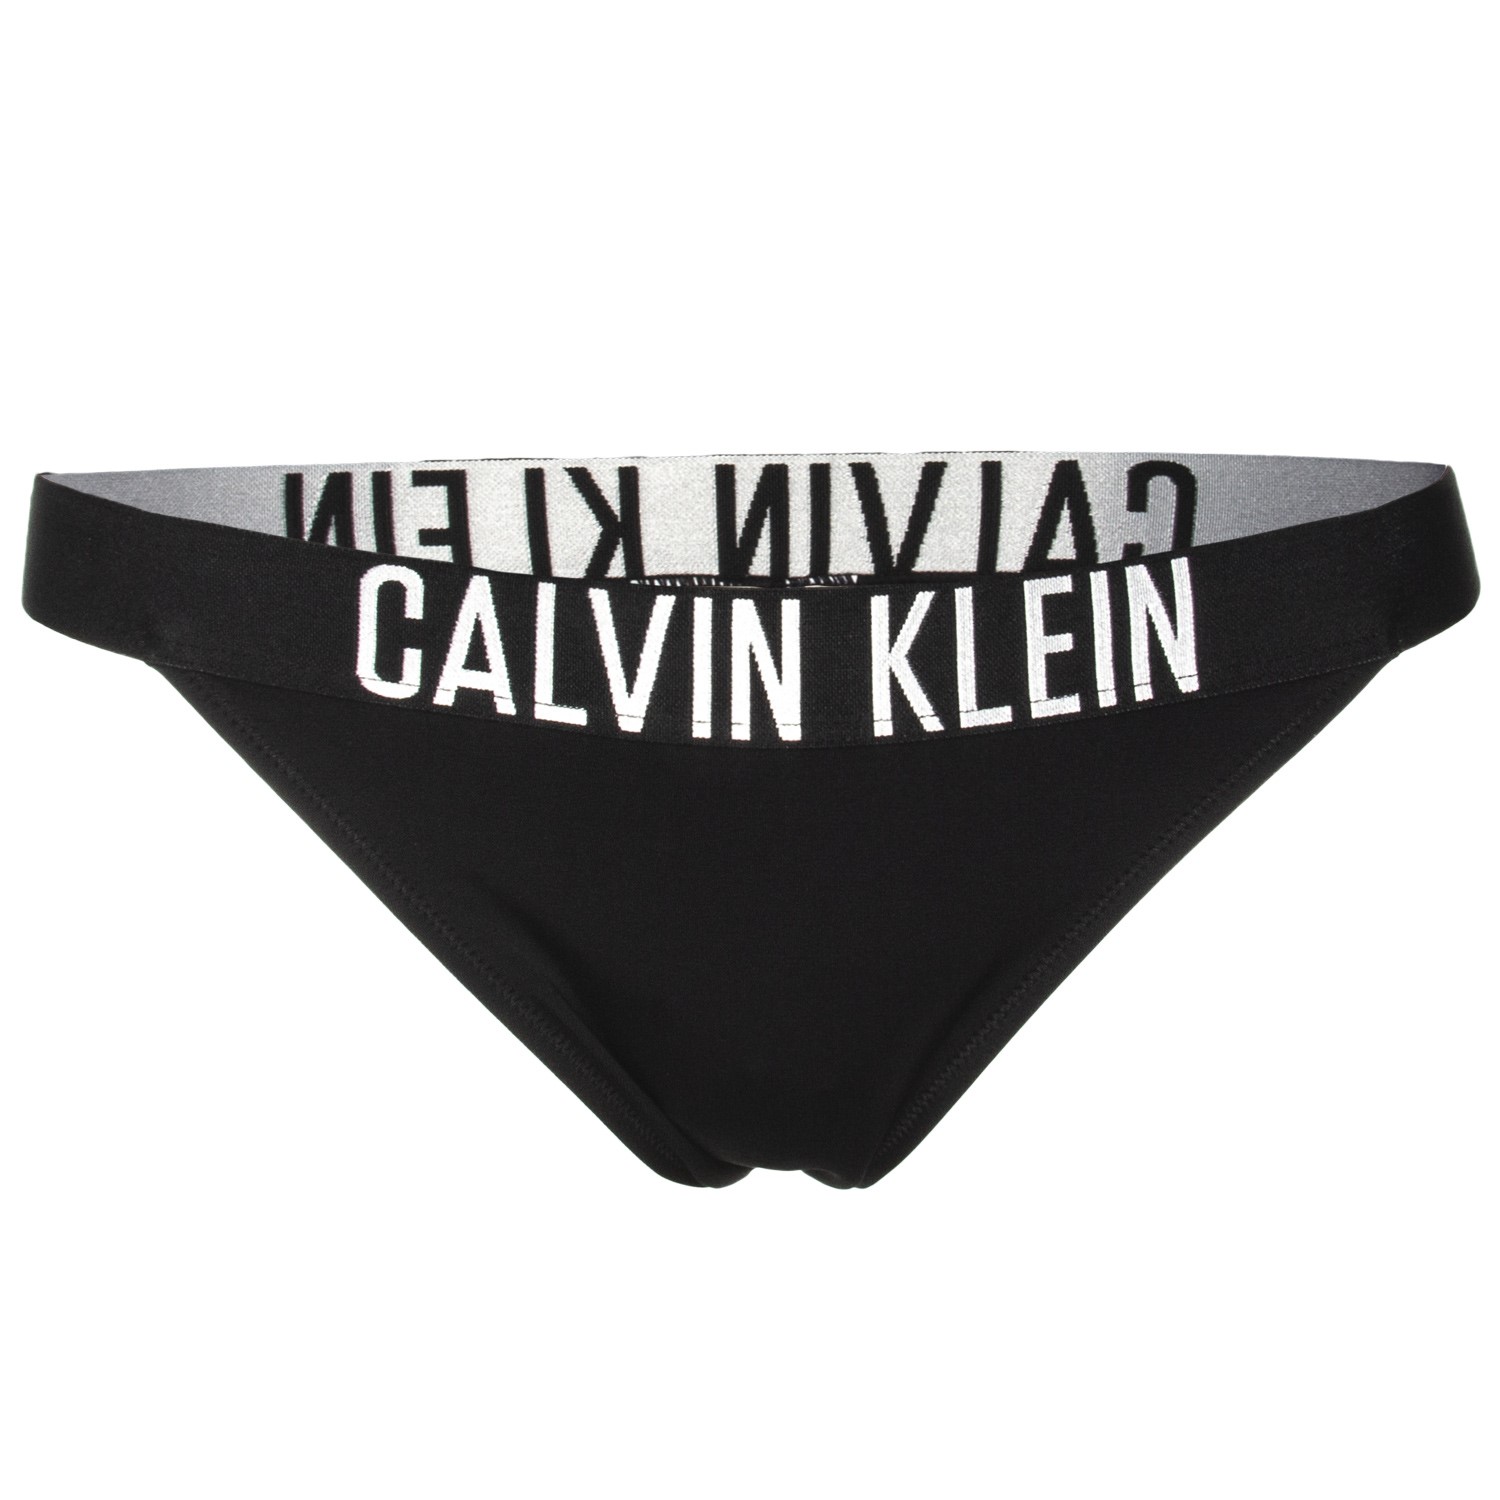 calvin klein brazilian logo bikini bottom